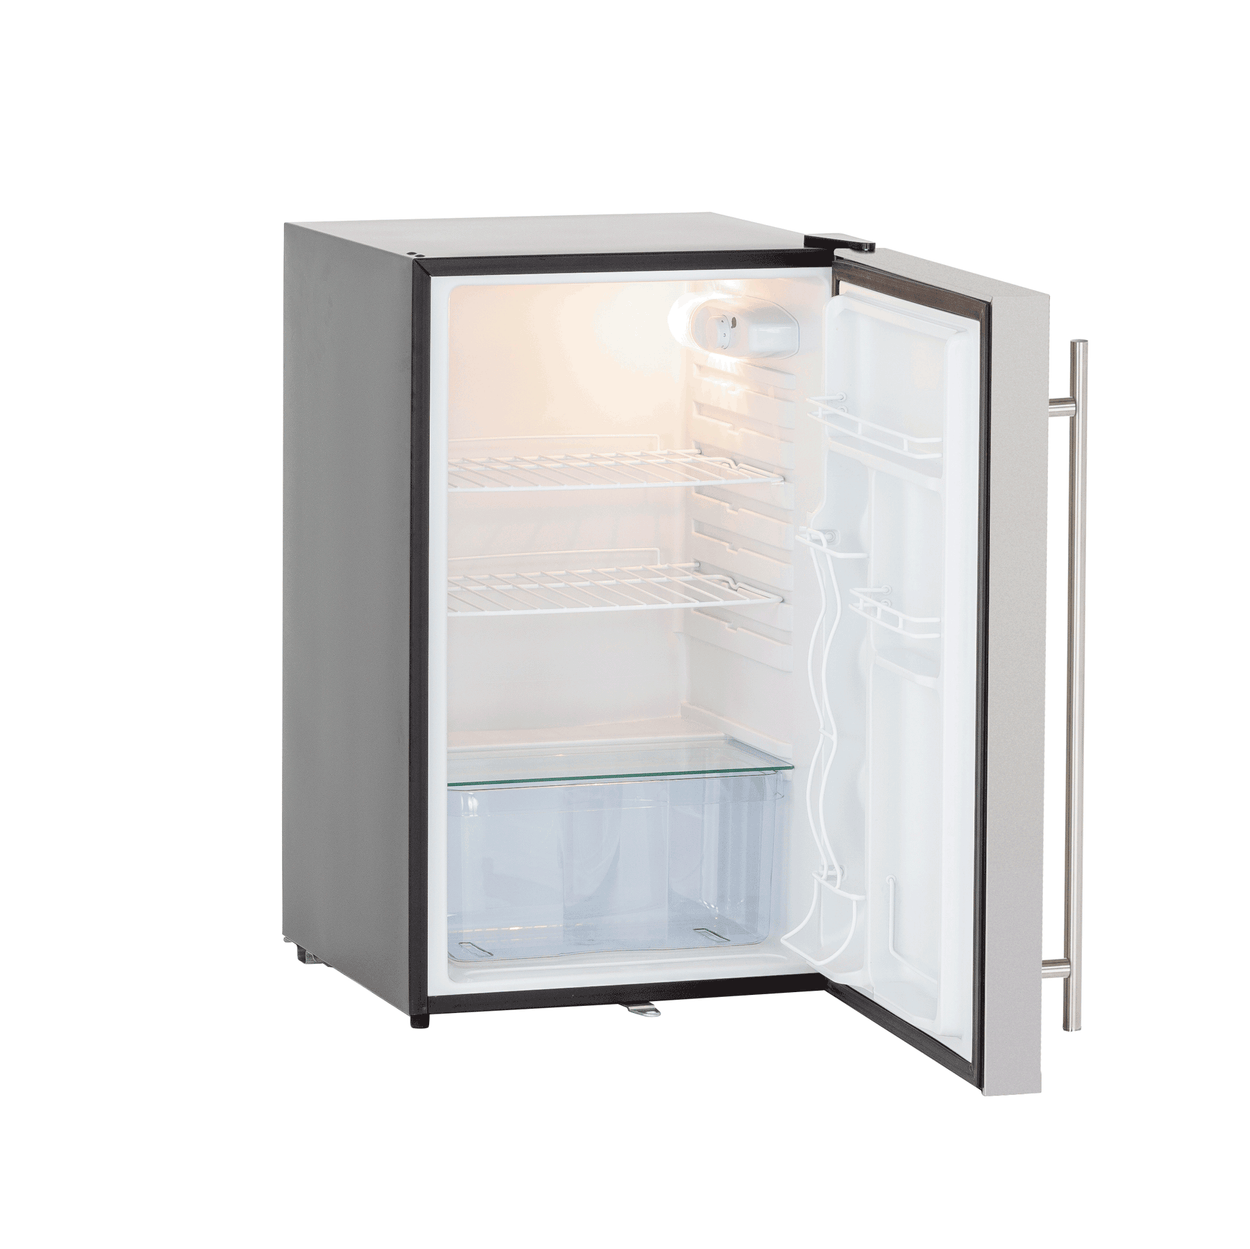 21" 4.5c Deluxe Compact Refrigerator